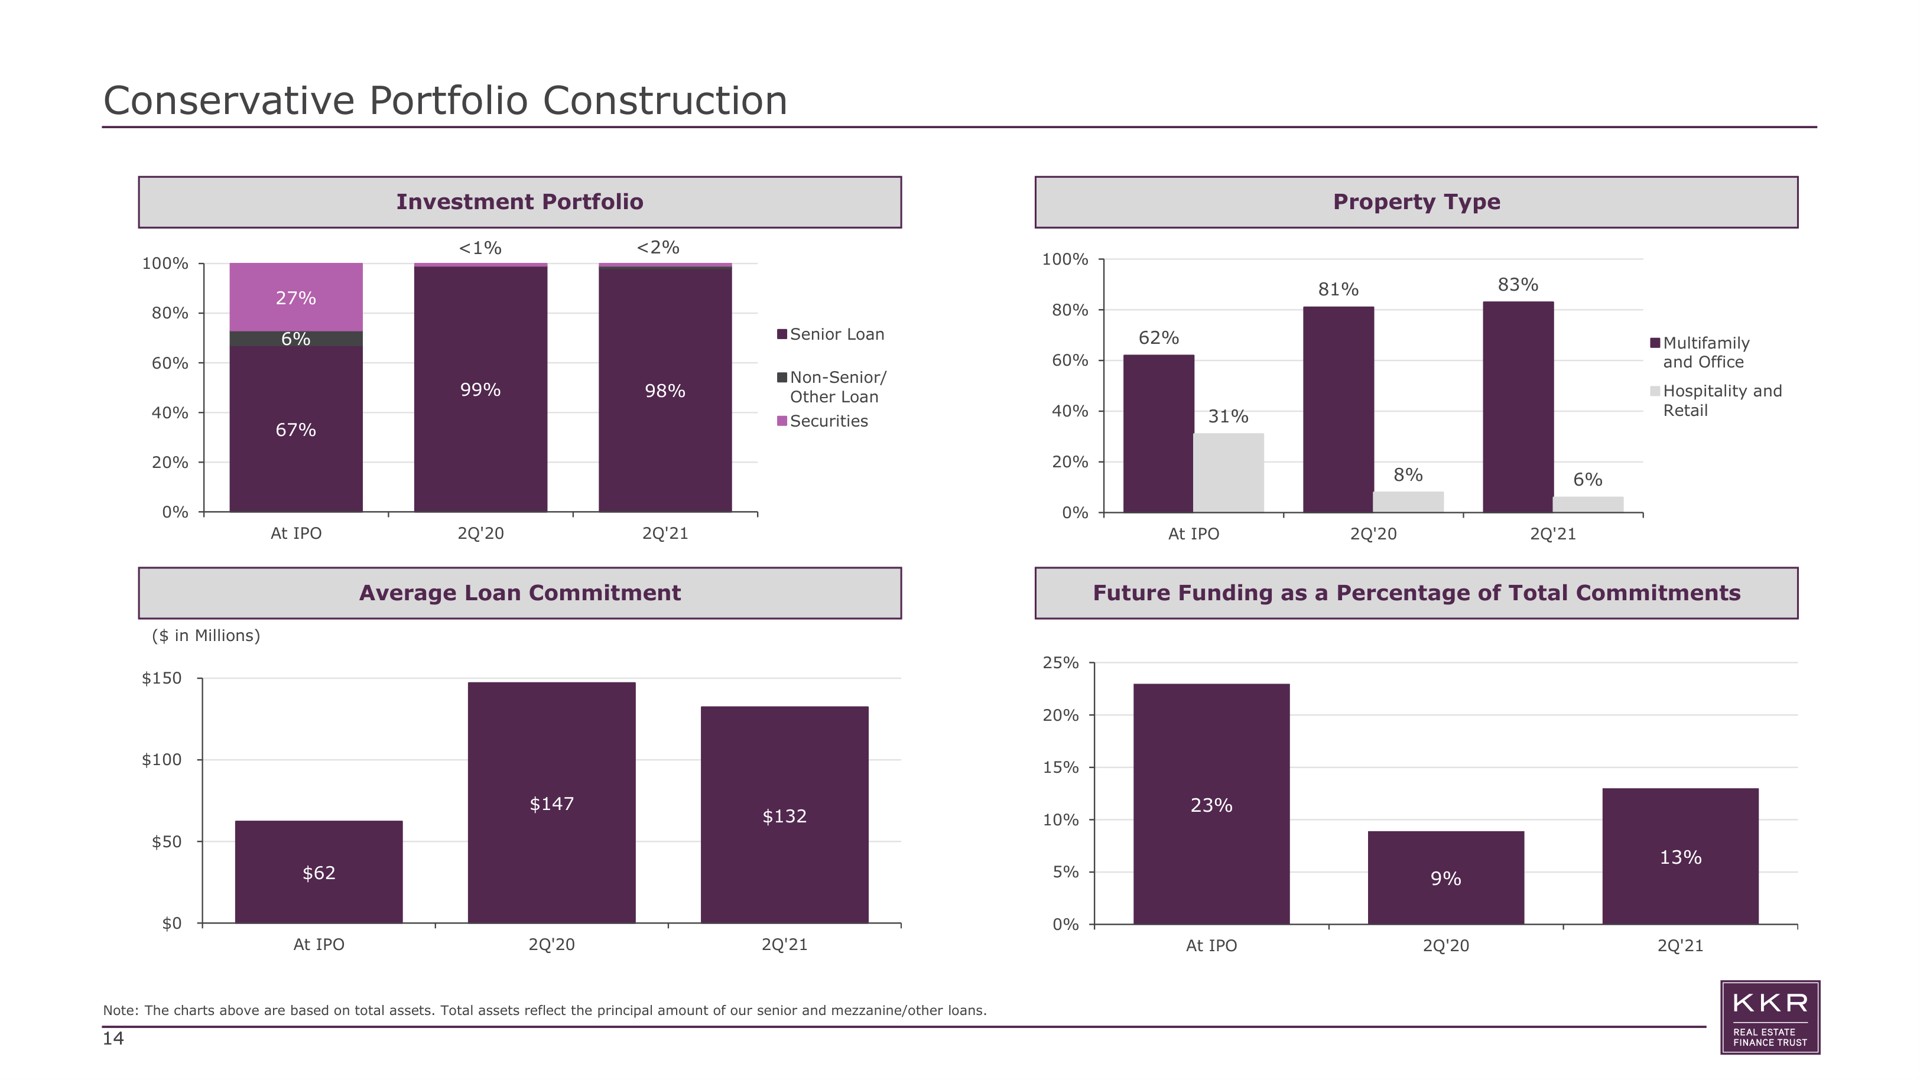 conservative portfolio construction at | KKR Real Estate Finance Trust